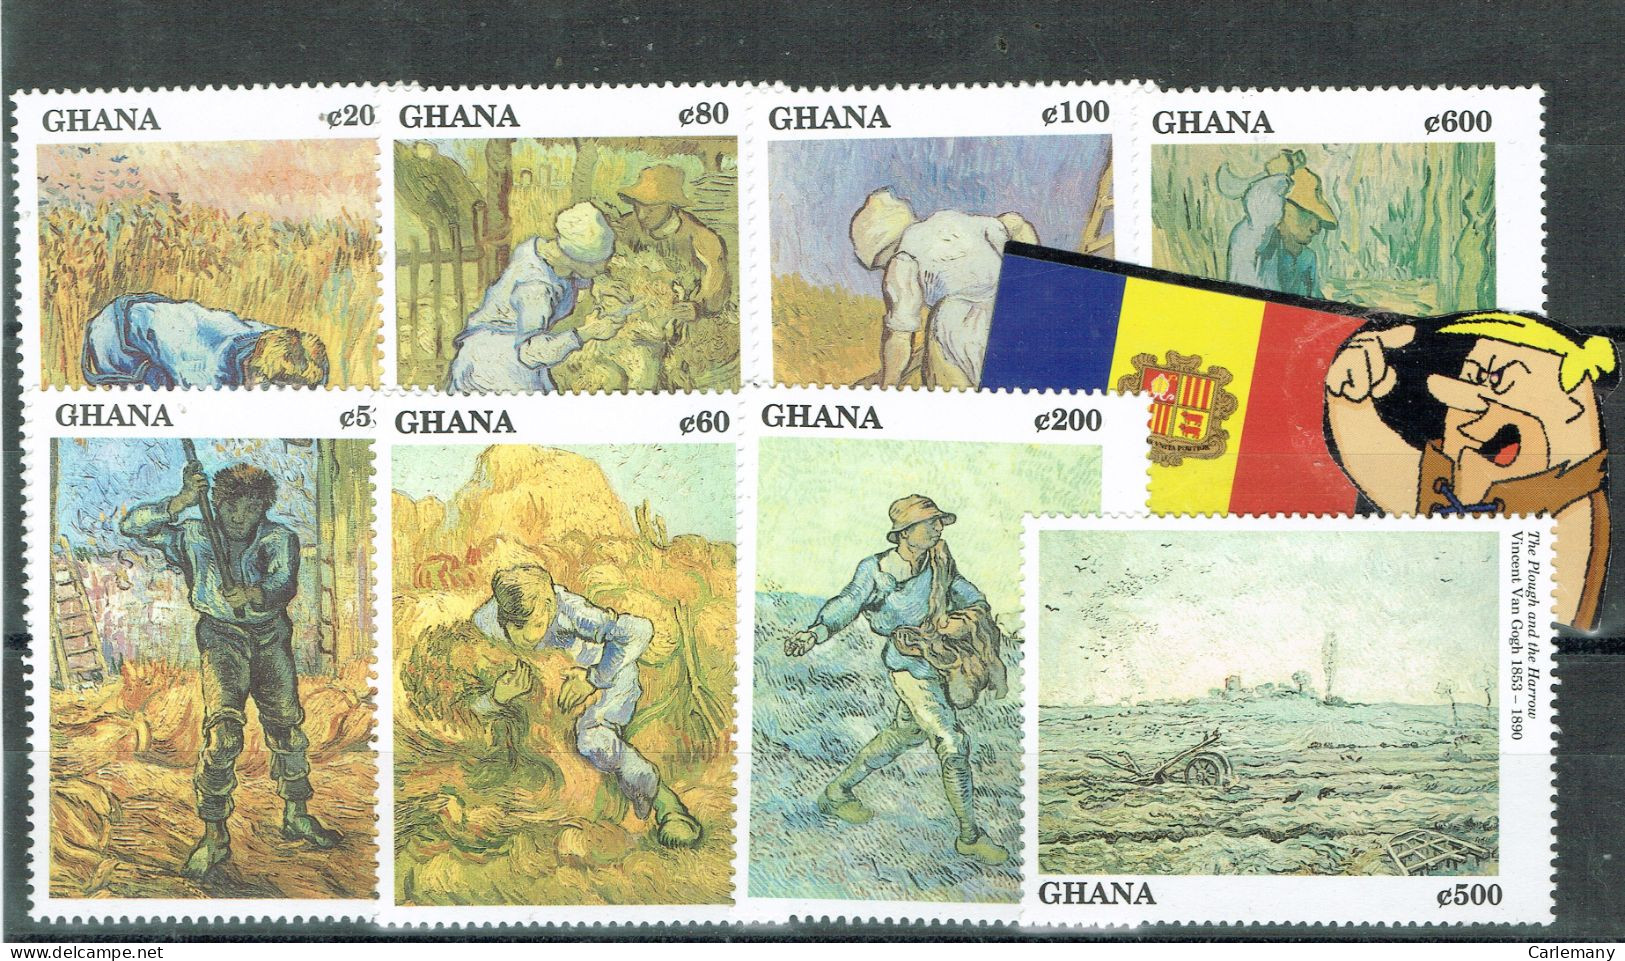 FIL GHANA  SET 8V  VAN GOOD  1991 - Ghana (1957-...)